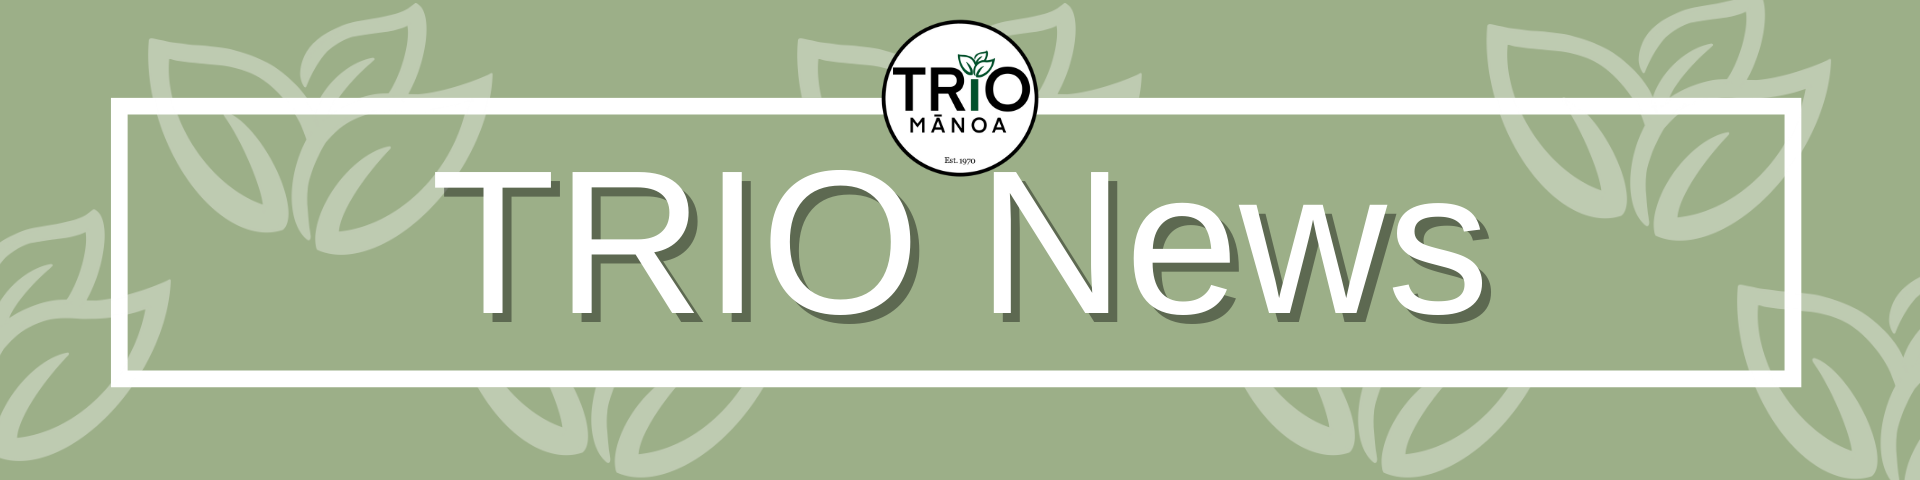 Trio Manoa News Banner